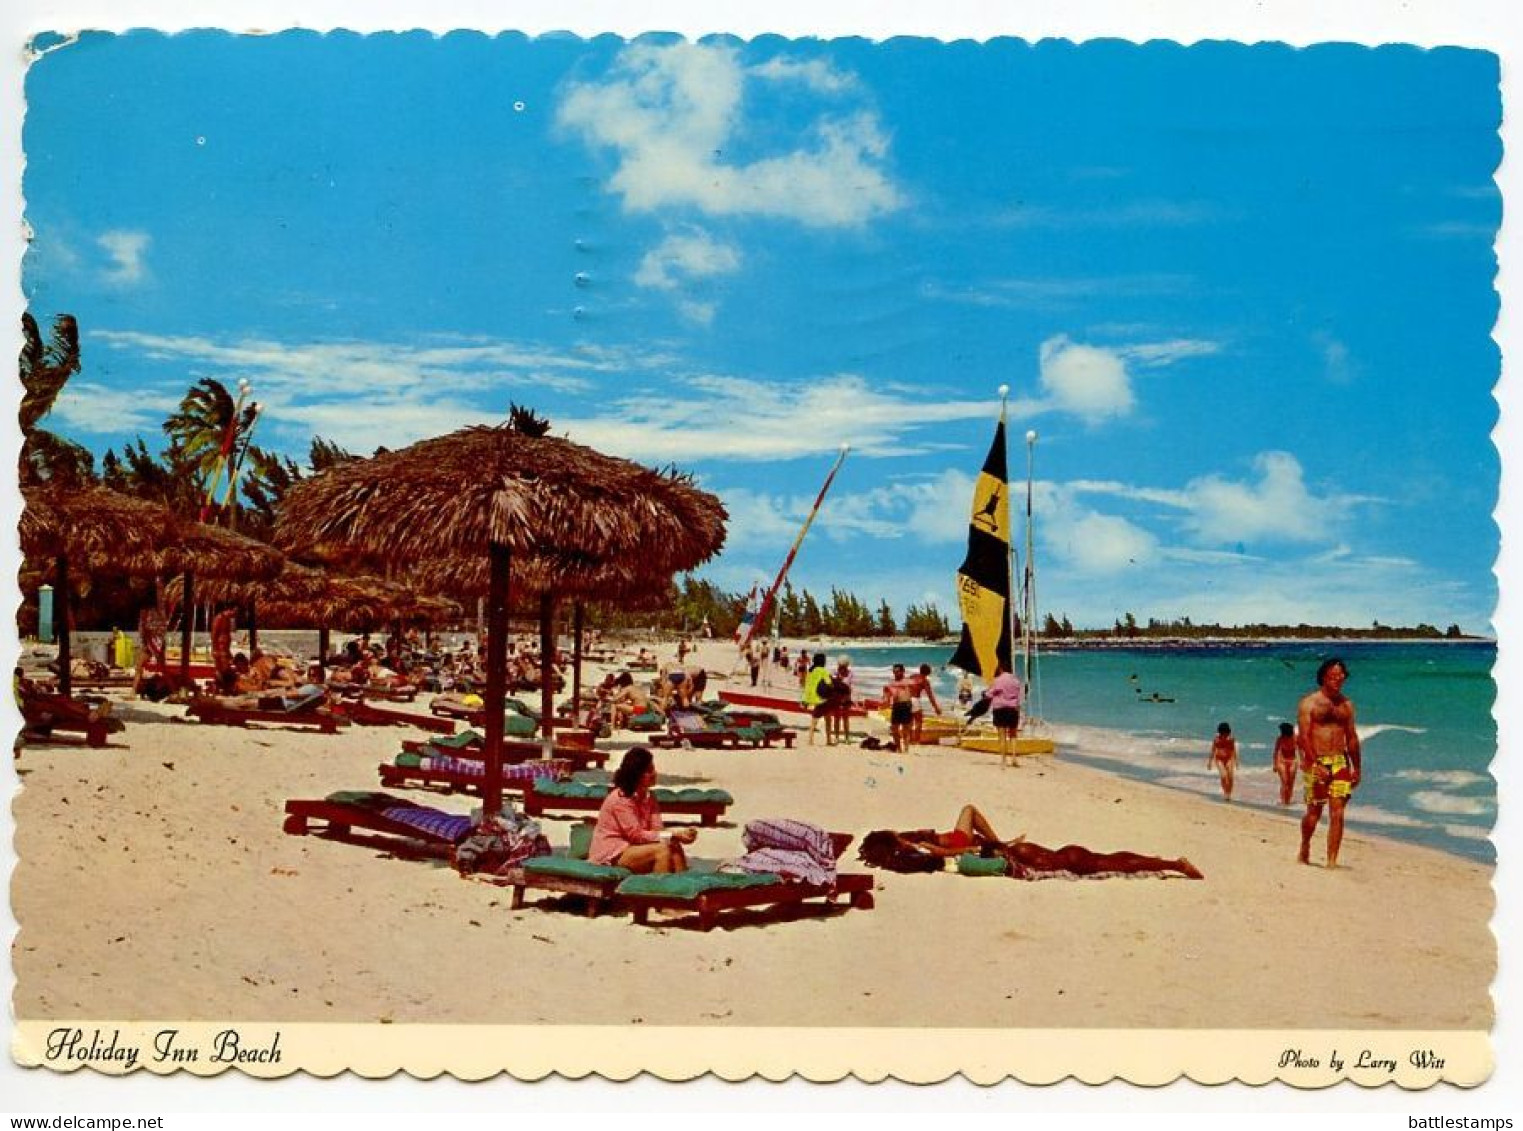 Bahamas 1974 Postcard Holiday Inn Beach - Freeport; 7c. QEII & Hibiscus Flowers Stamps, Pair - Bahamas